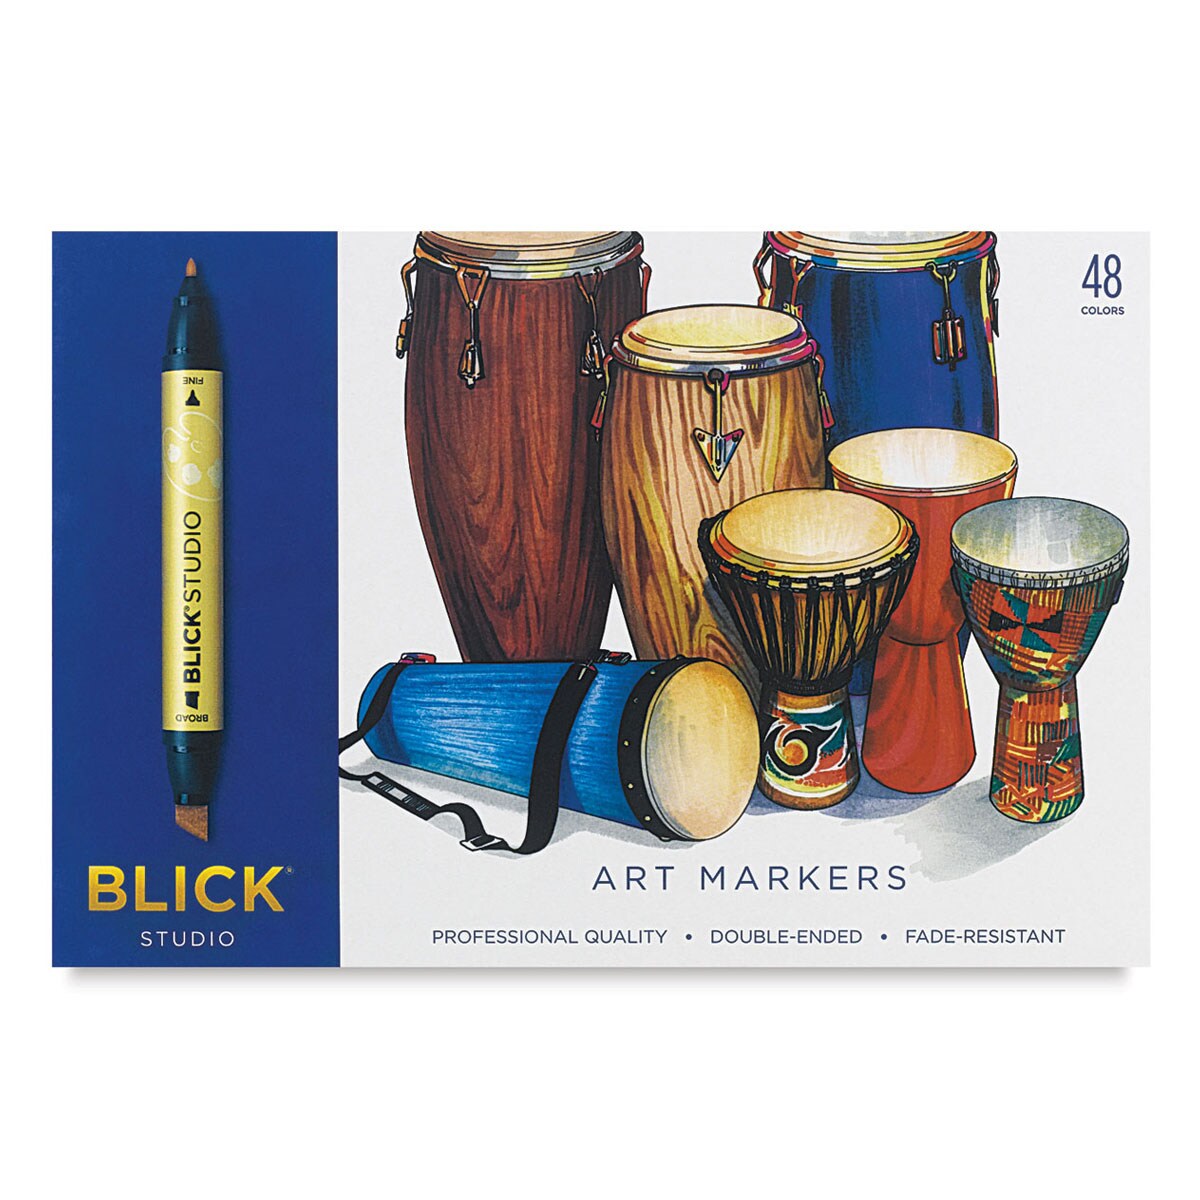 Blick Studio Marker Set - Assorted Colors, Set of 48